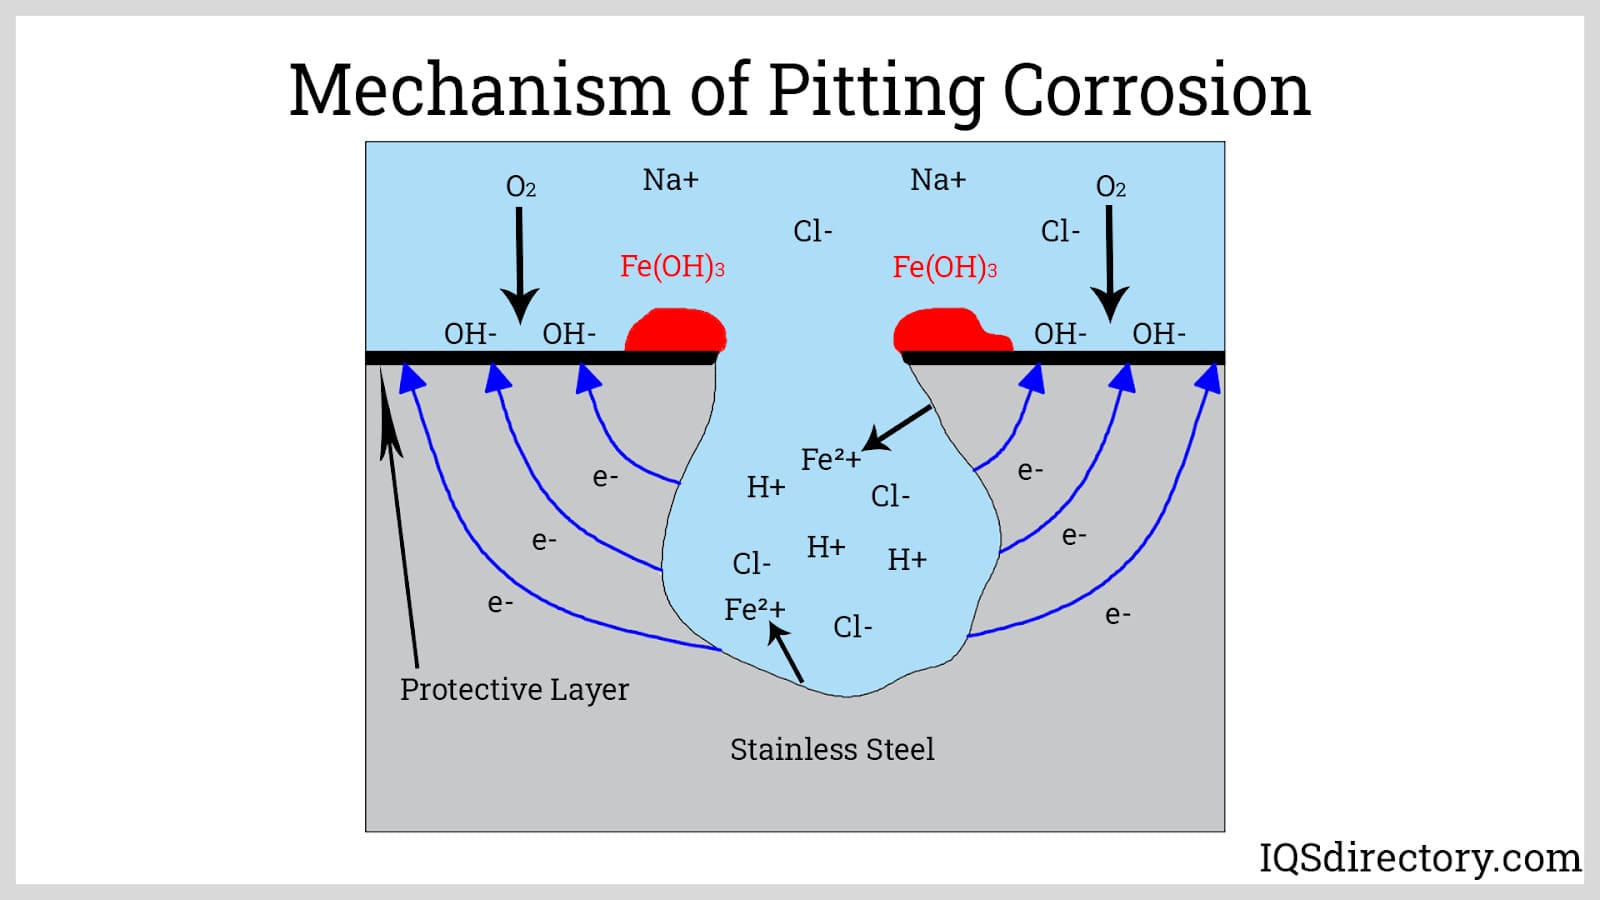 Mechanism of Pitting Corrosion